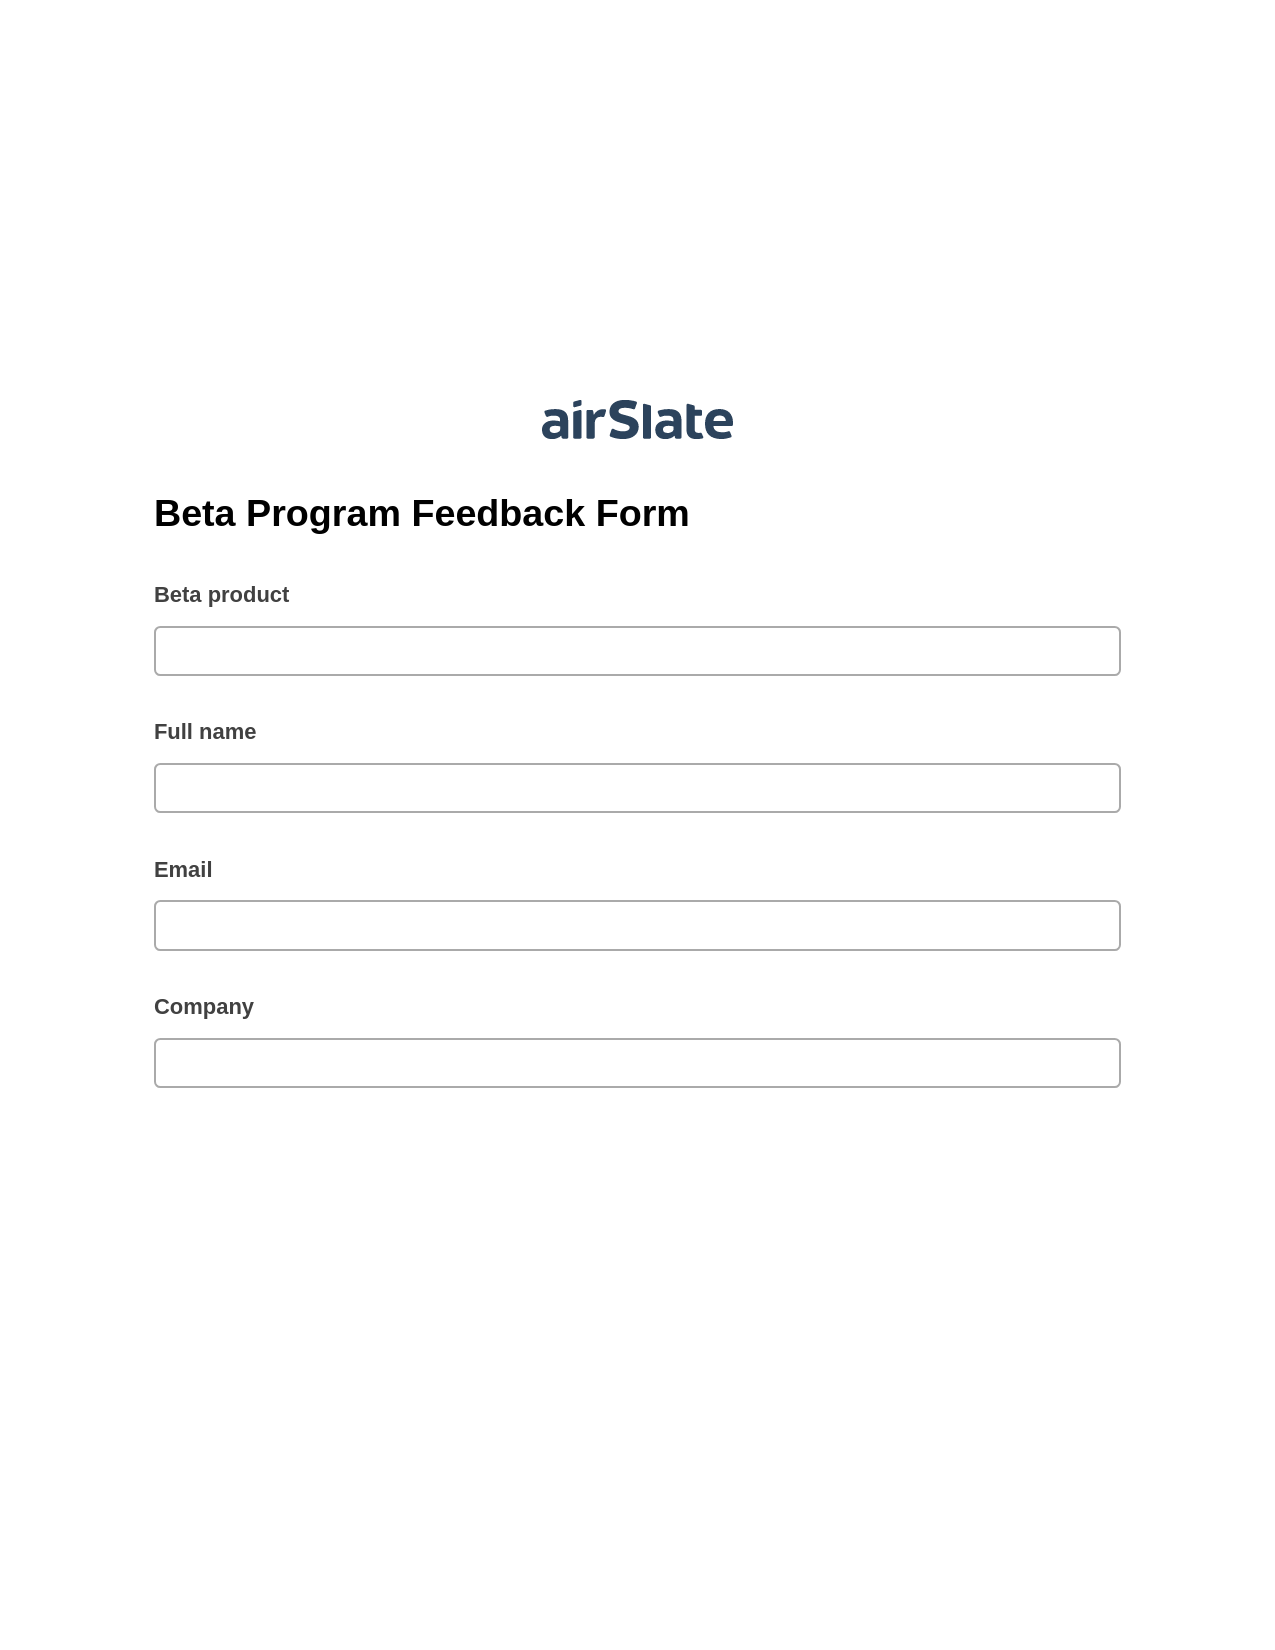 Beta Program Feedback Form Pre-fill Dropdowns from CSV File Bot, Audit Trail Bot, OneDrive Bot